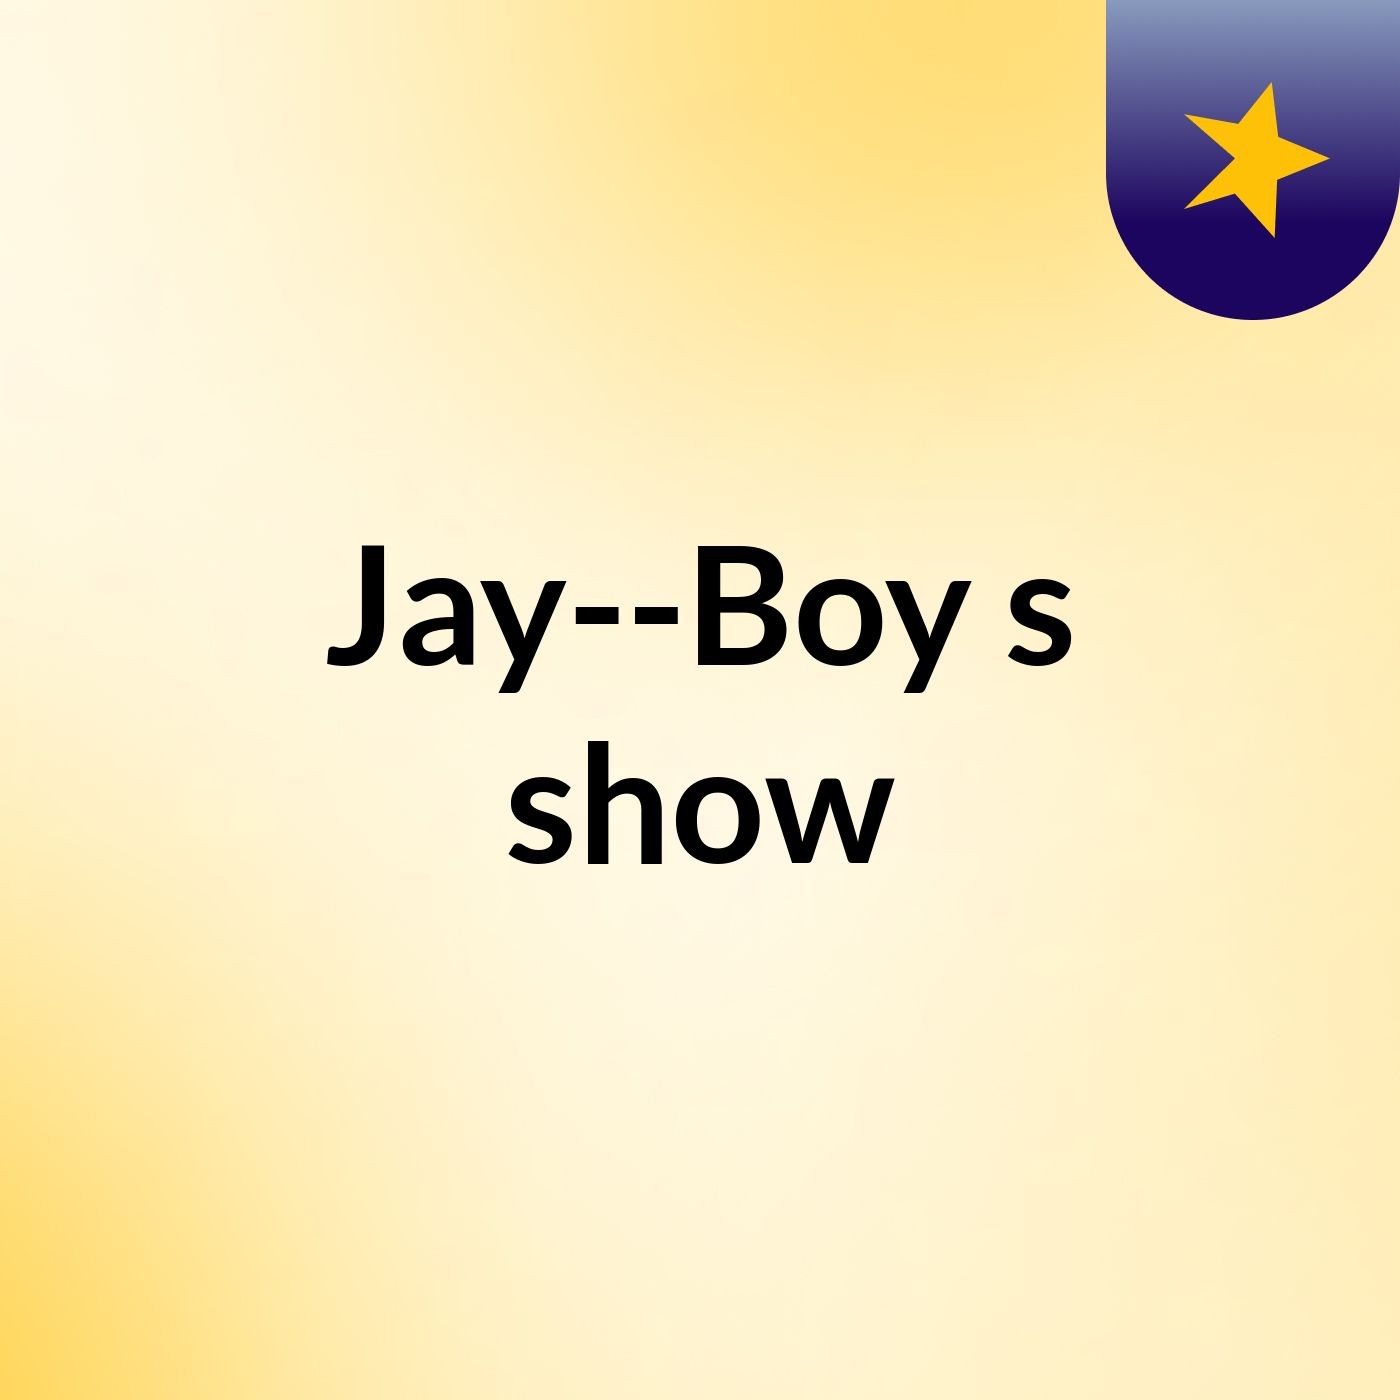 Jay--Boy's show